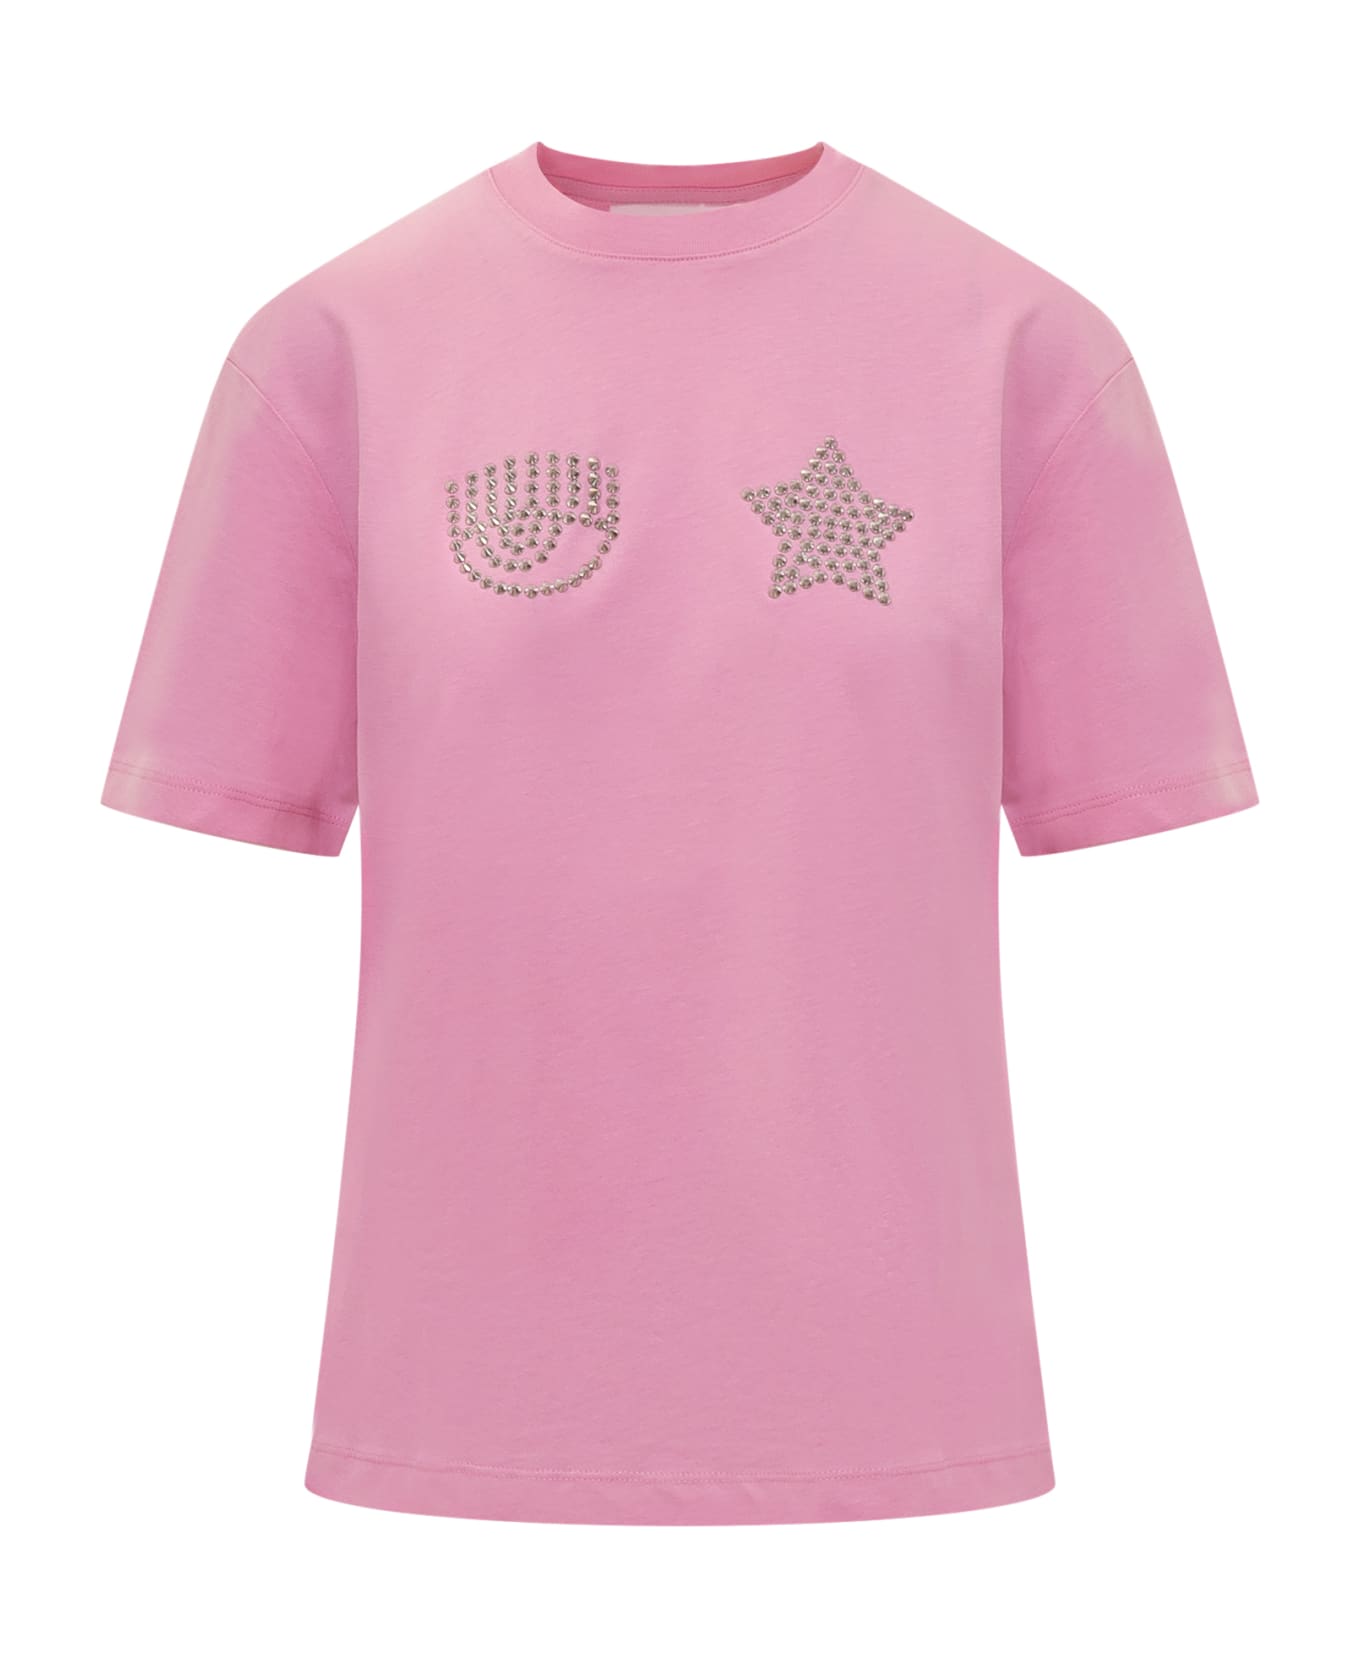 Chiara Ferragni Eye Star T-shirt - FUCHSIA PINK Tシャツ